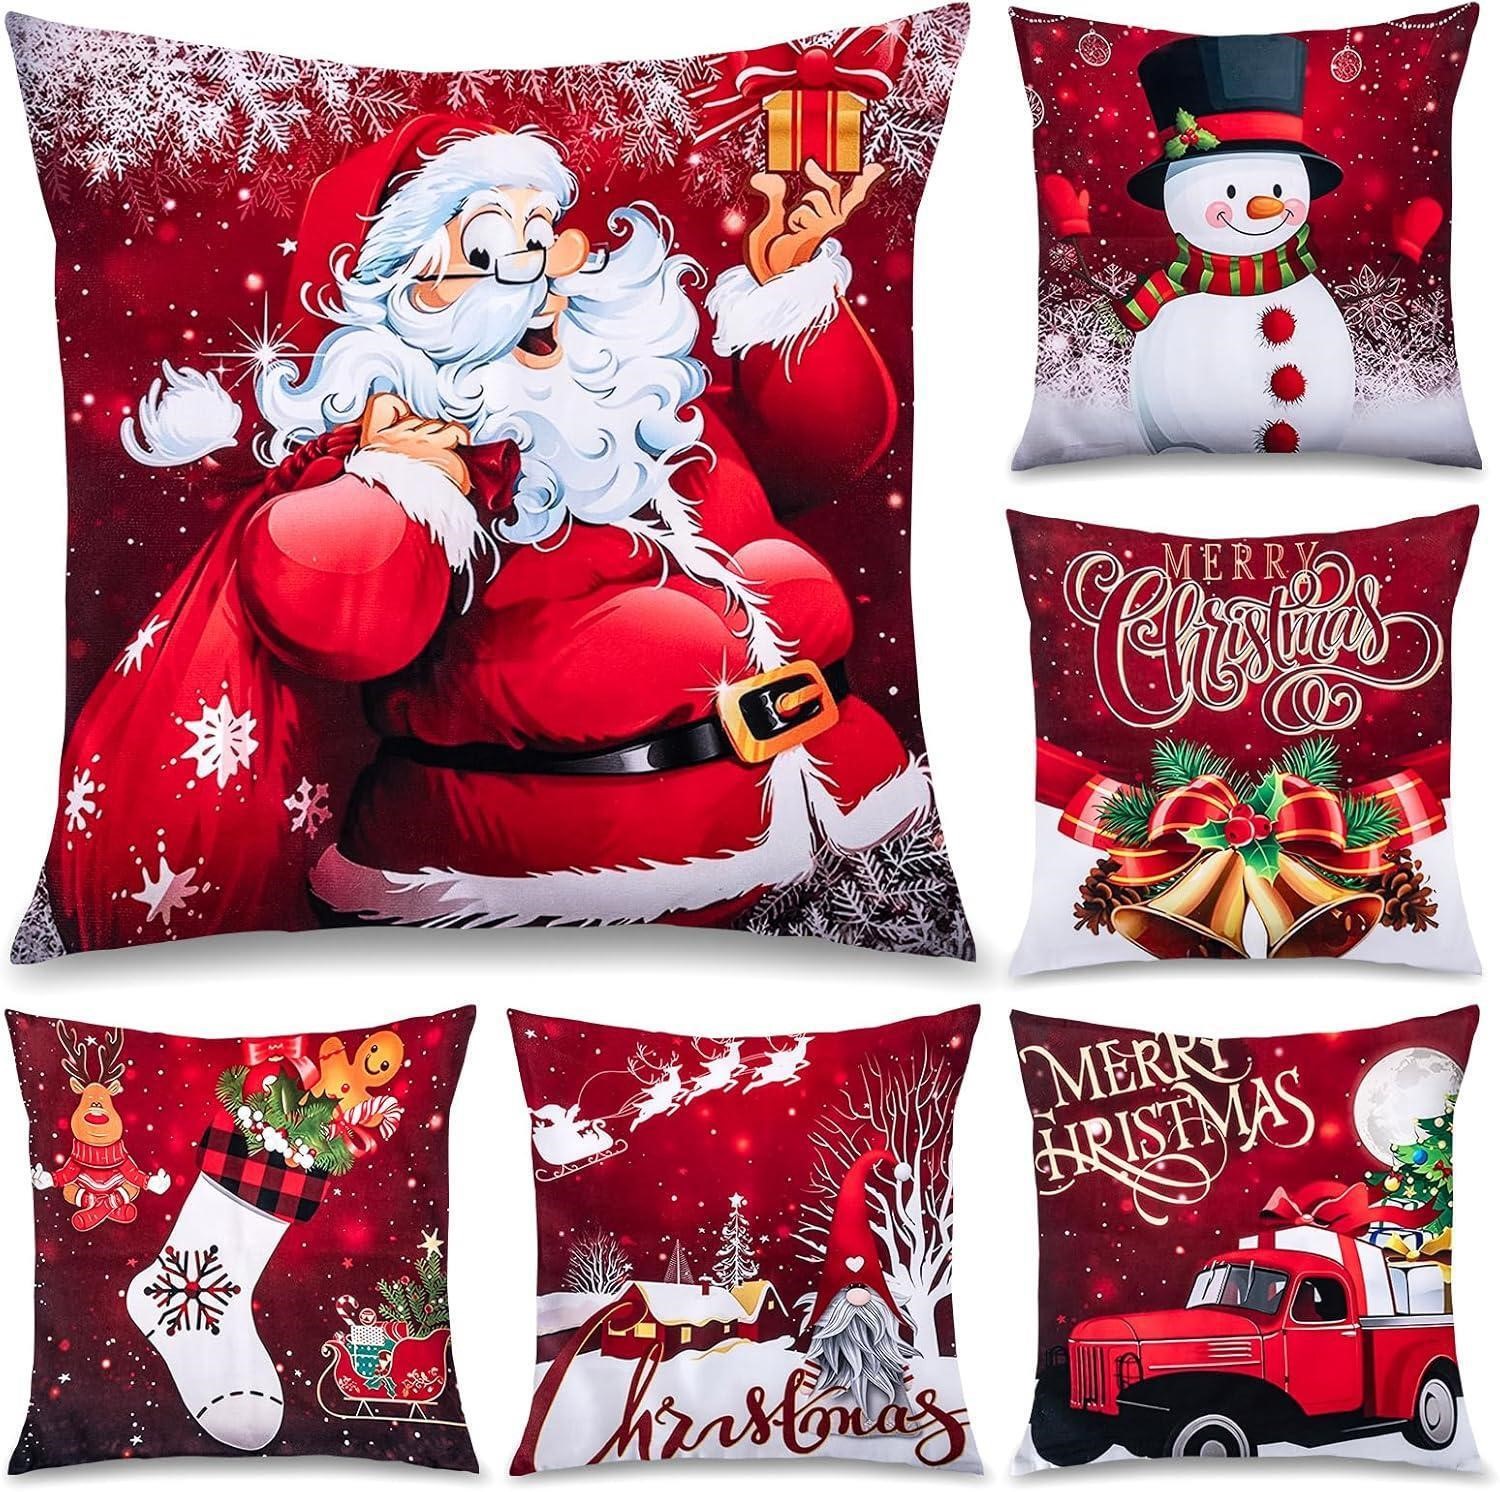 Matymats 50x50cm Christmas Cushion Covers x2